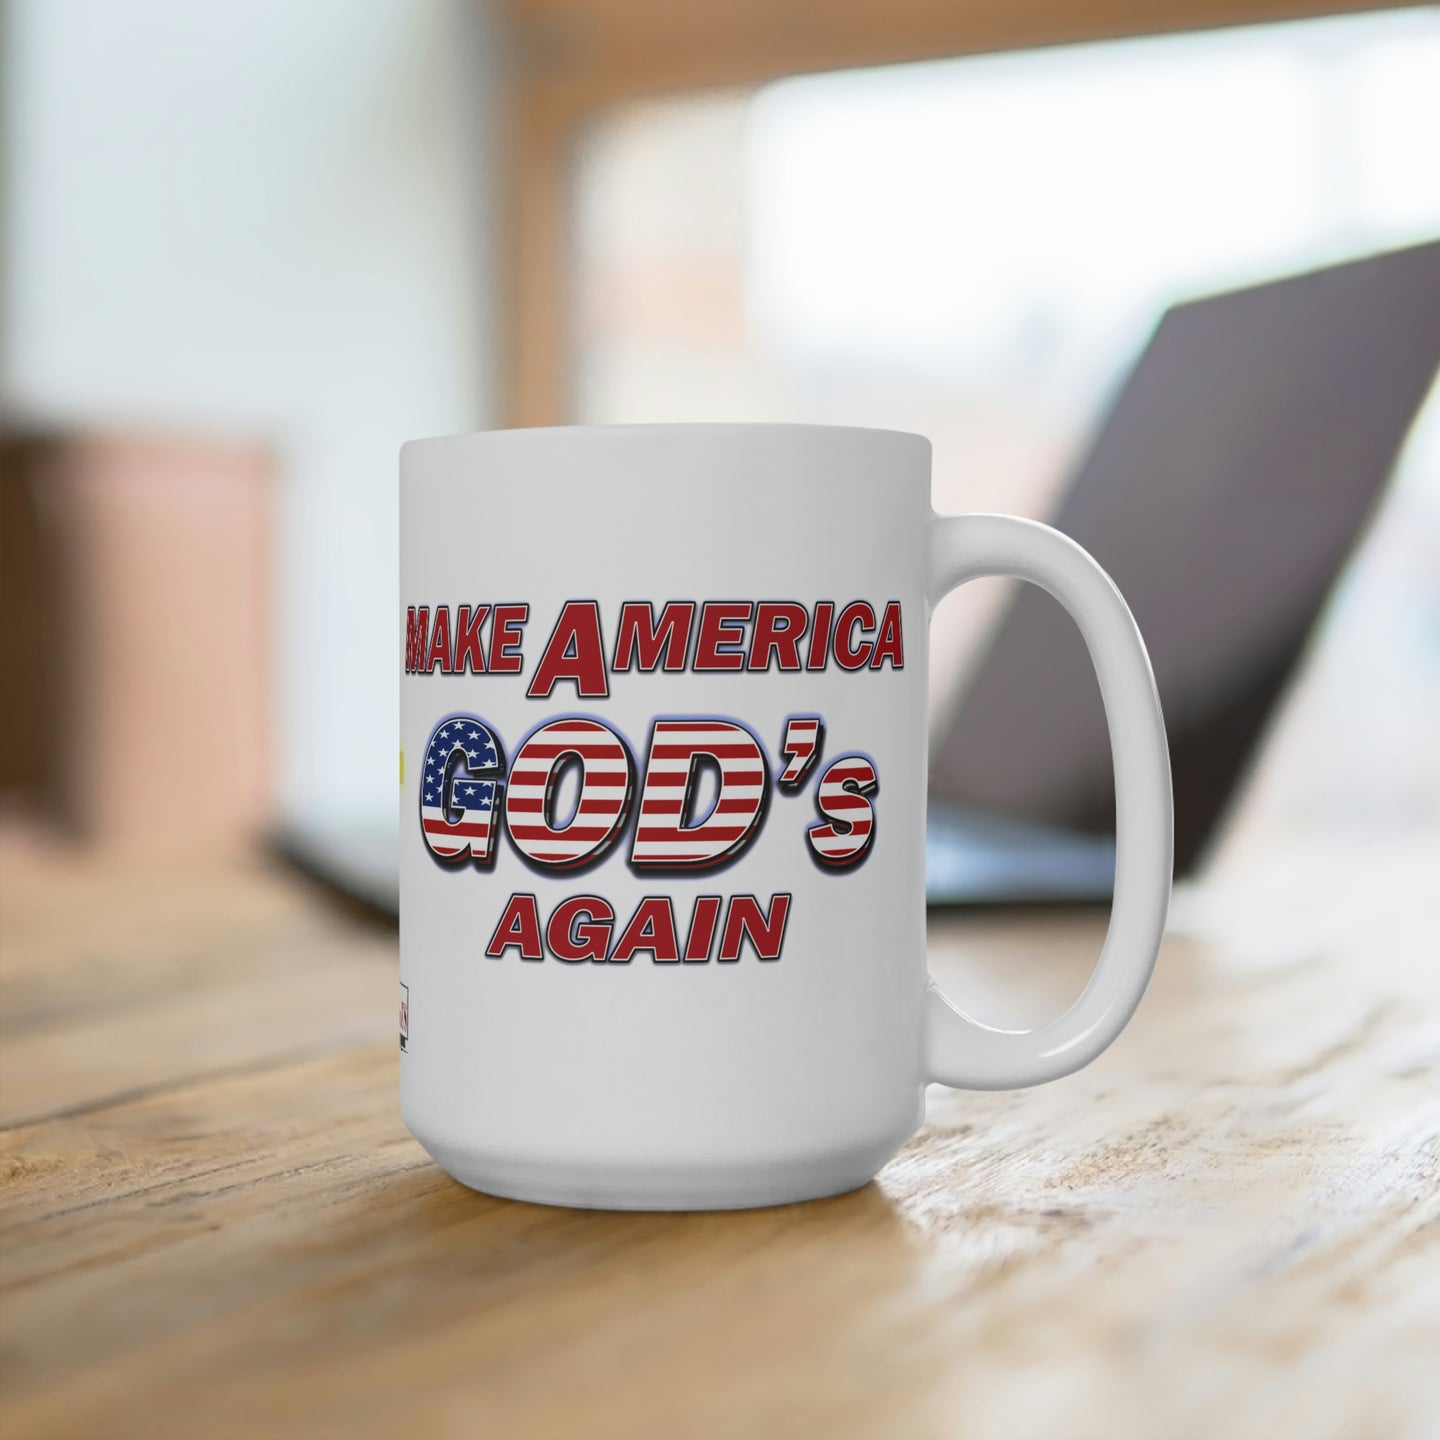 Make America GOD's Again Mug (15oz)